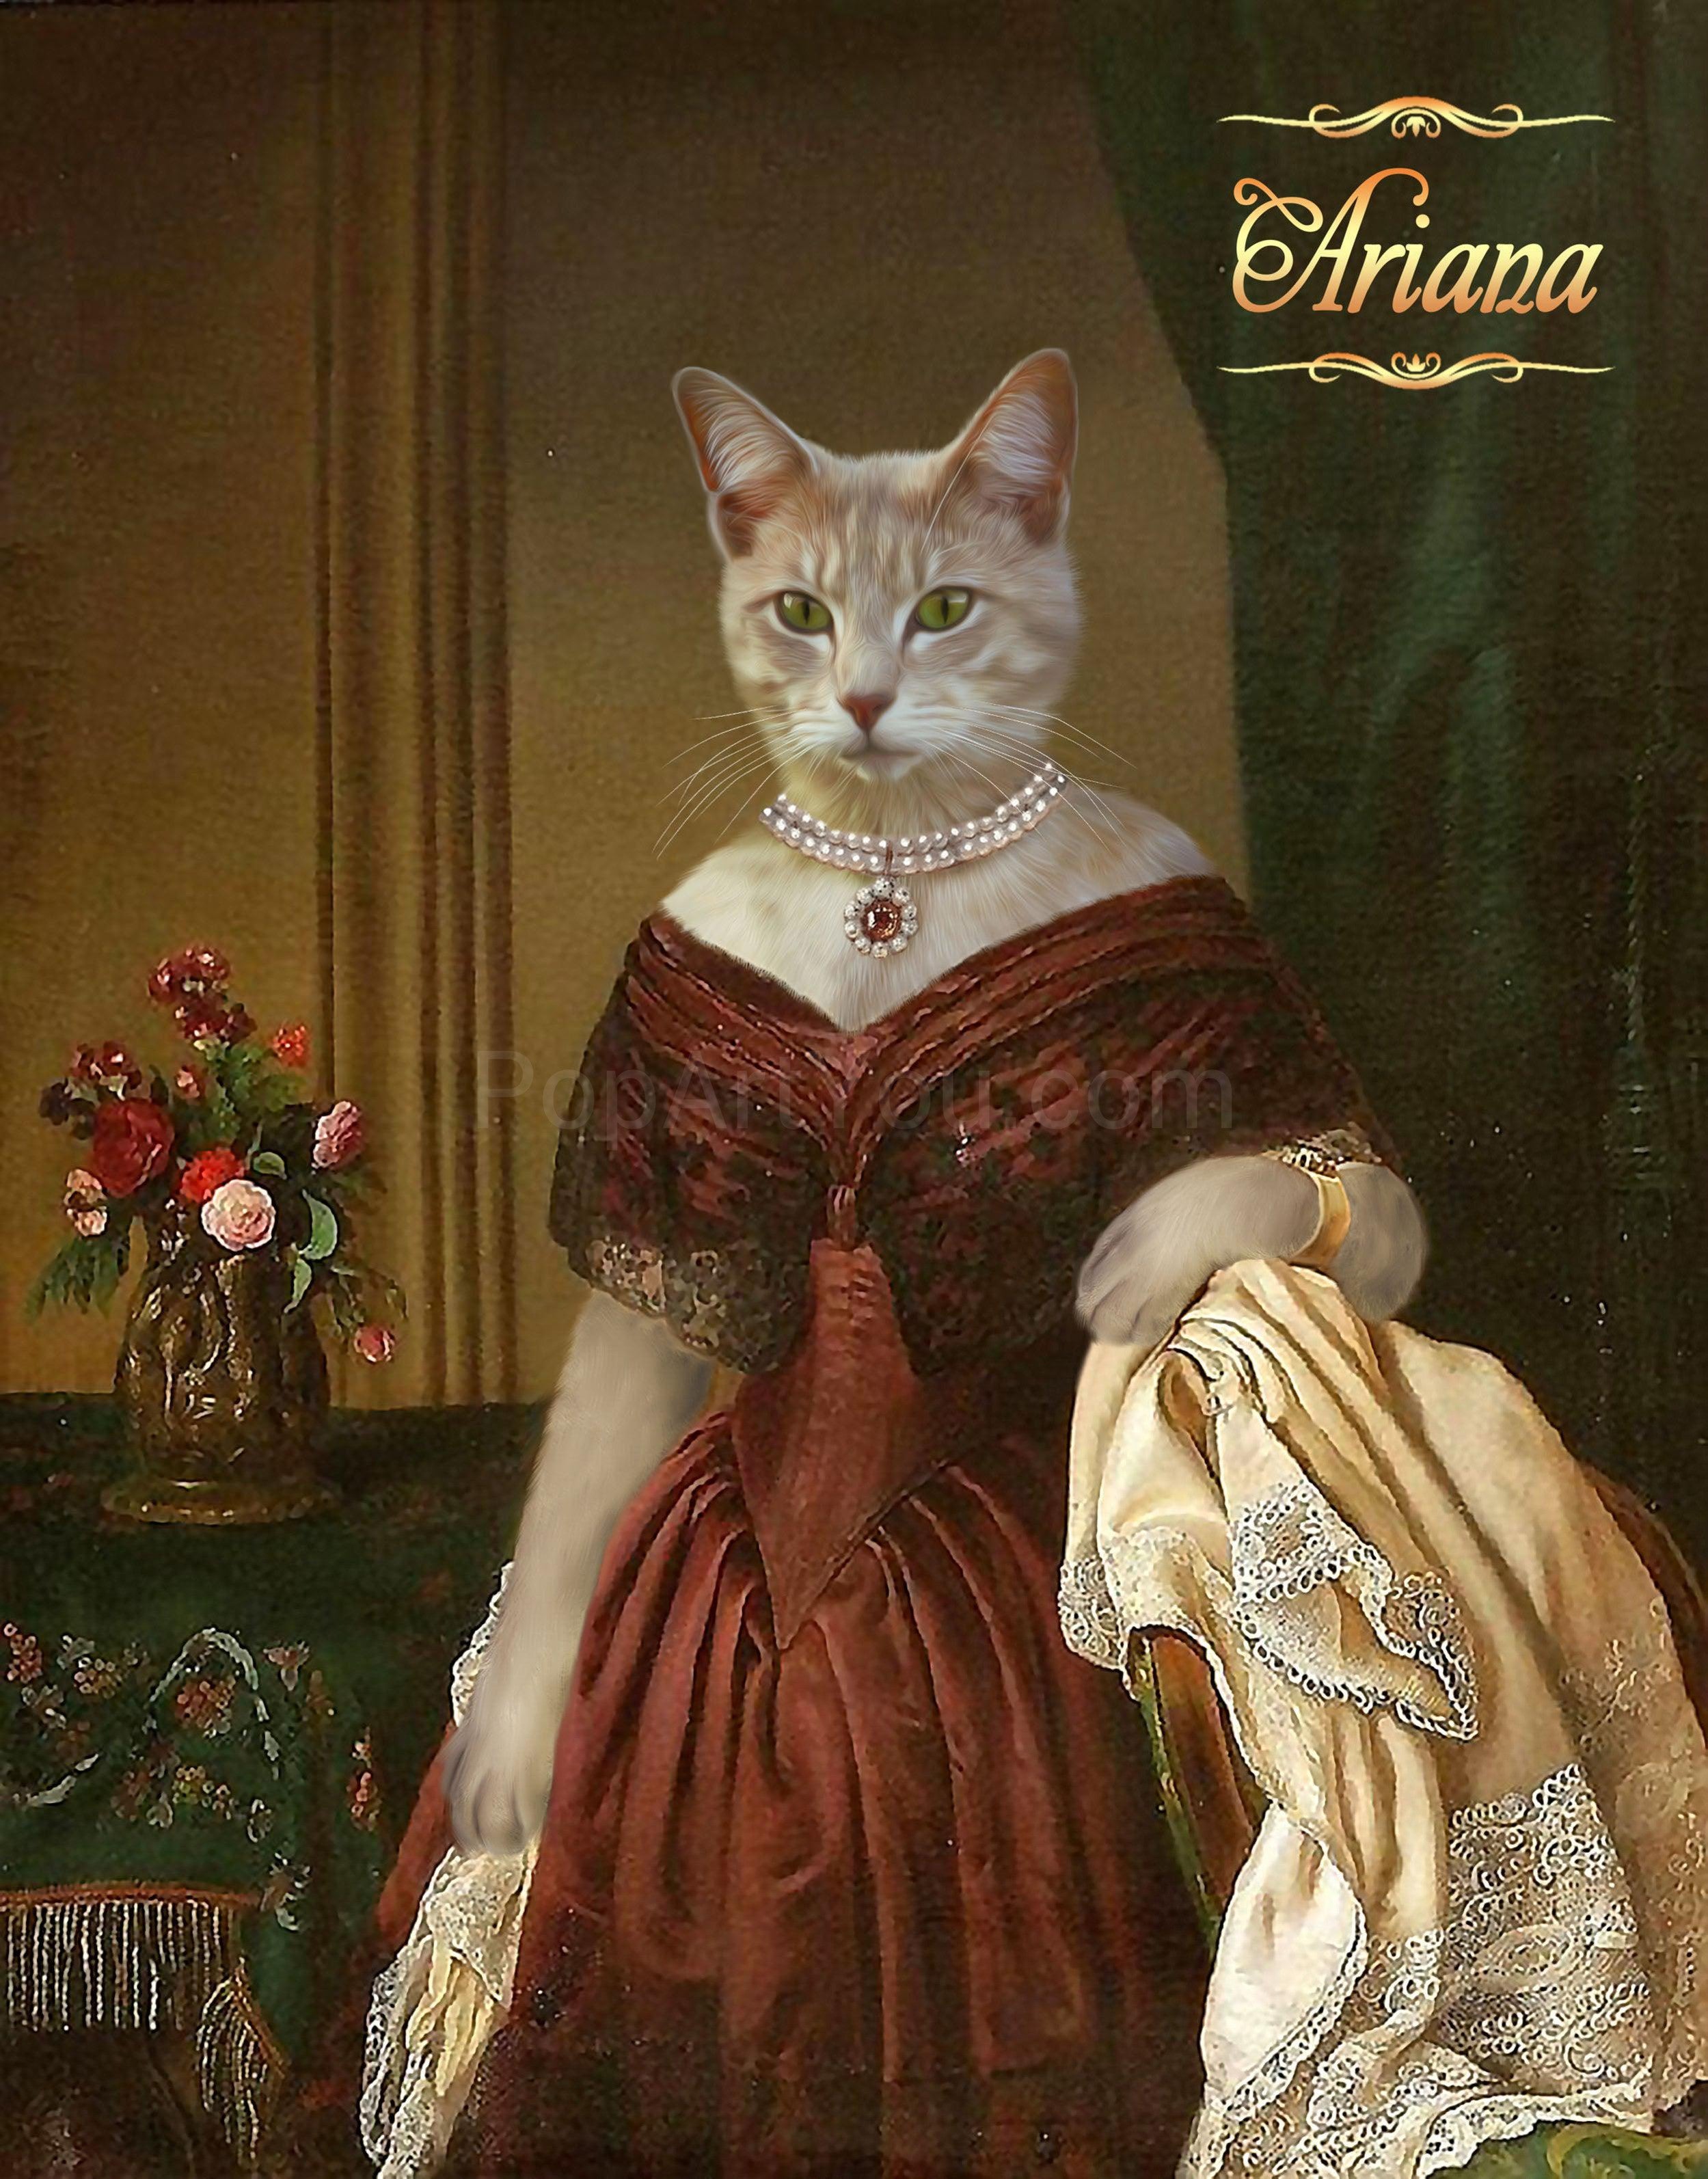 Baroness Elizabeth female cat portrait